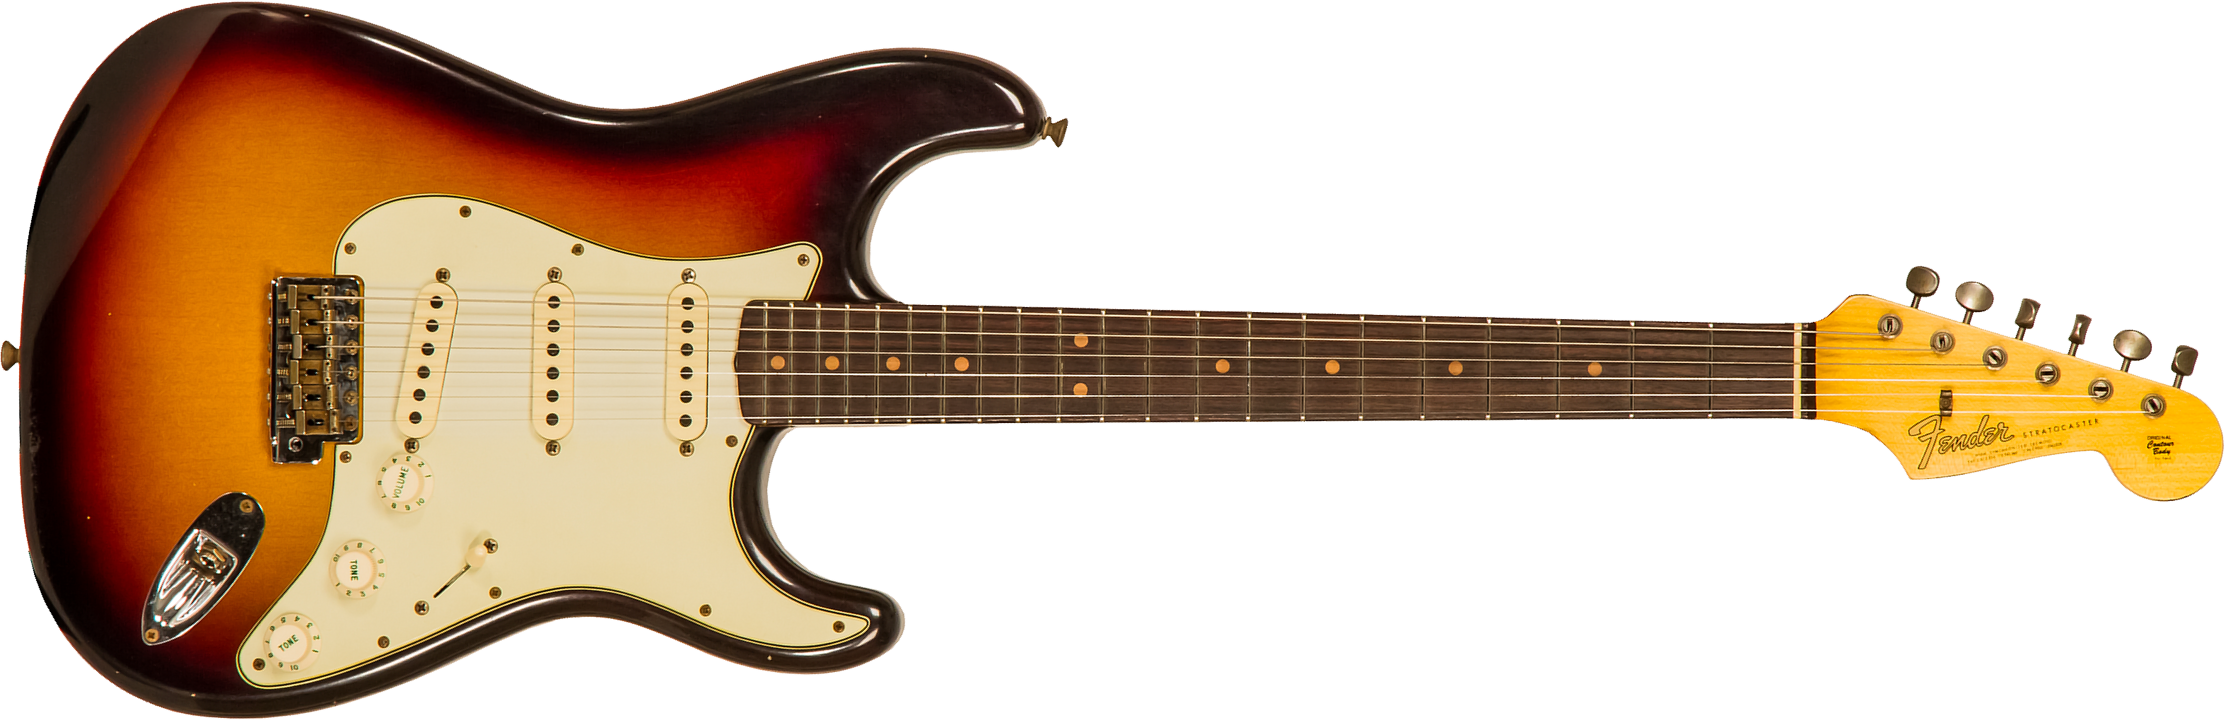 Fender Custom Shop Strat 1964 3s Trem Rw - Journeyman Relic Target 3-color Sunburst - Elektrische gitaar in Str-vorm - Main picture